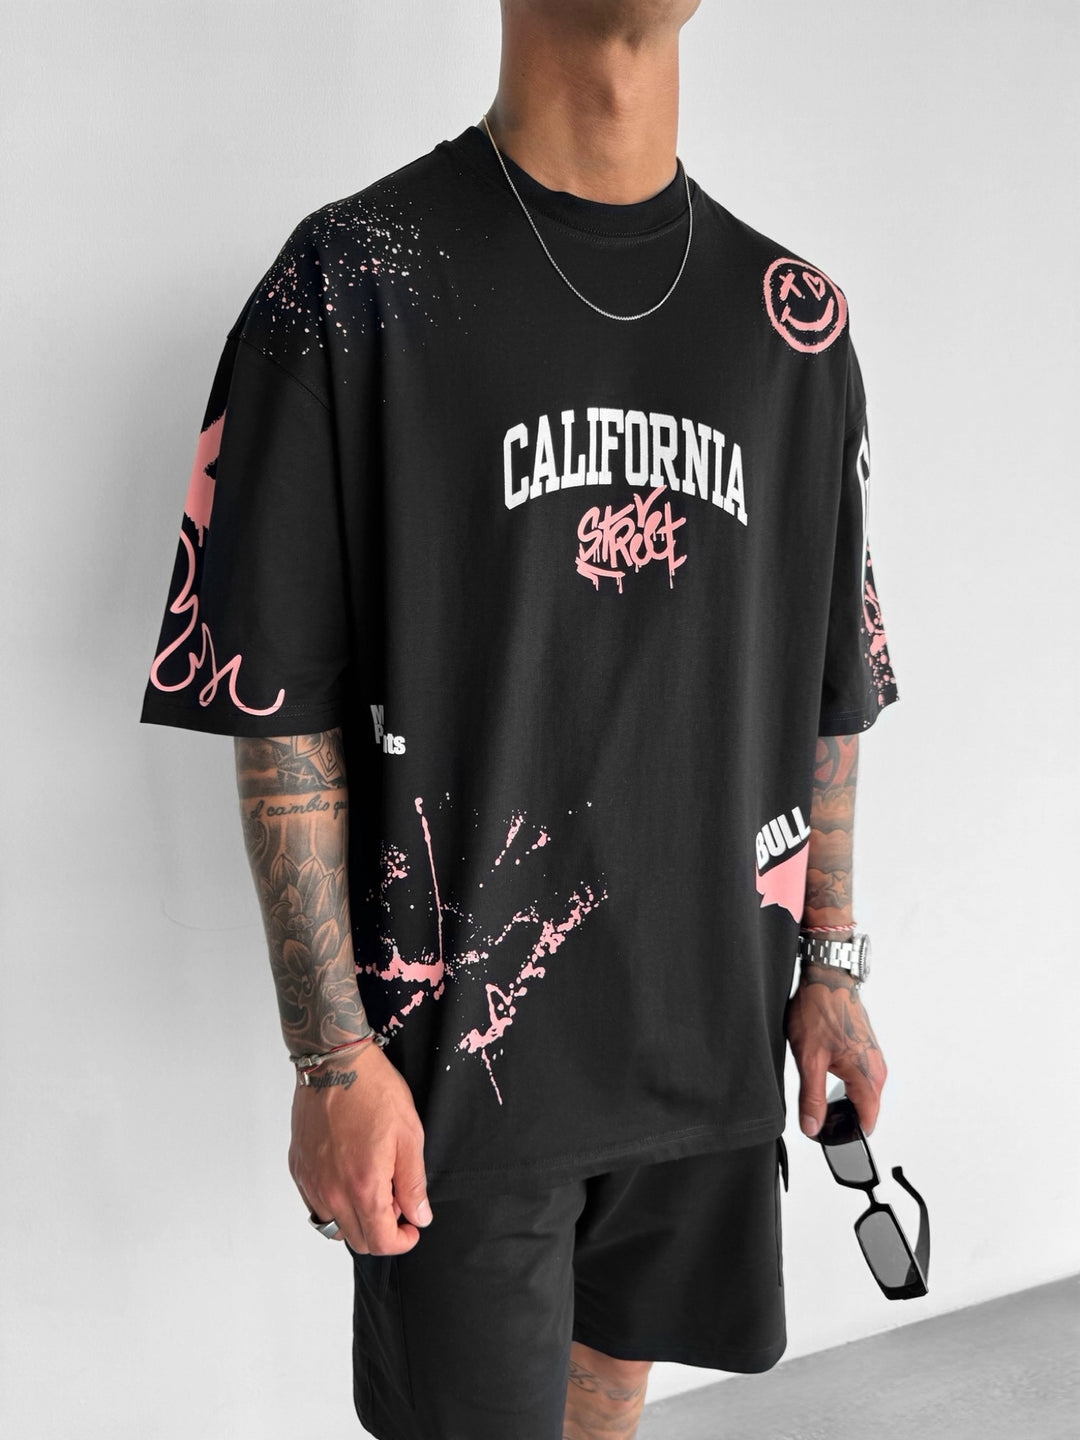 Oversize California Graffiti T-Shirt - Black and Pink